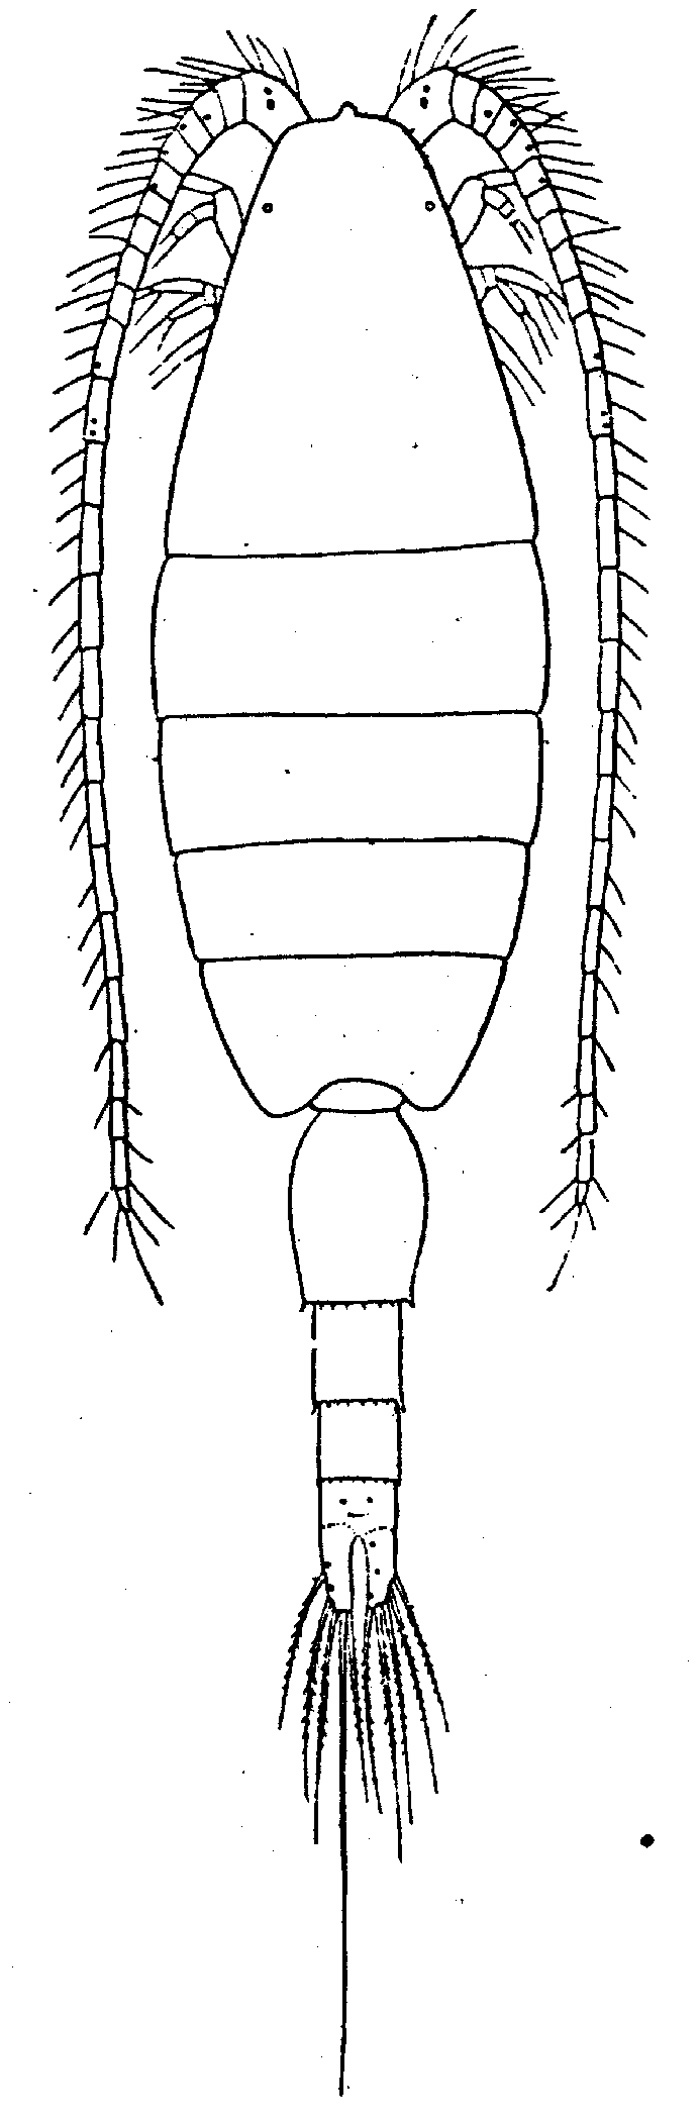 Species Heterorhabdus papilliger - Plate 7 of morphological figures